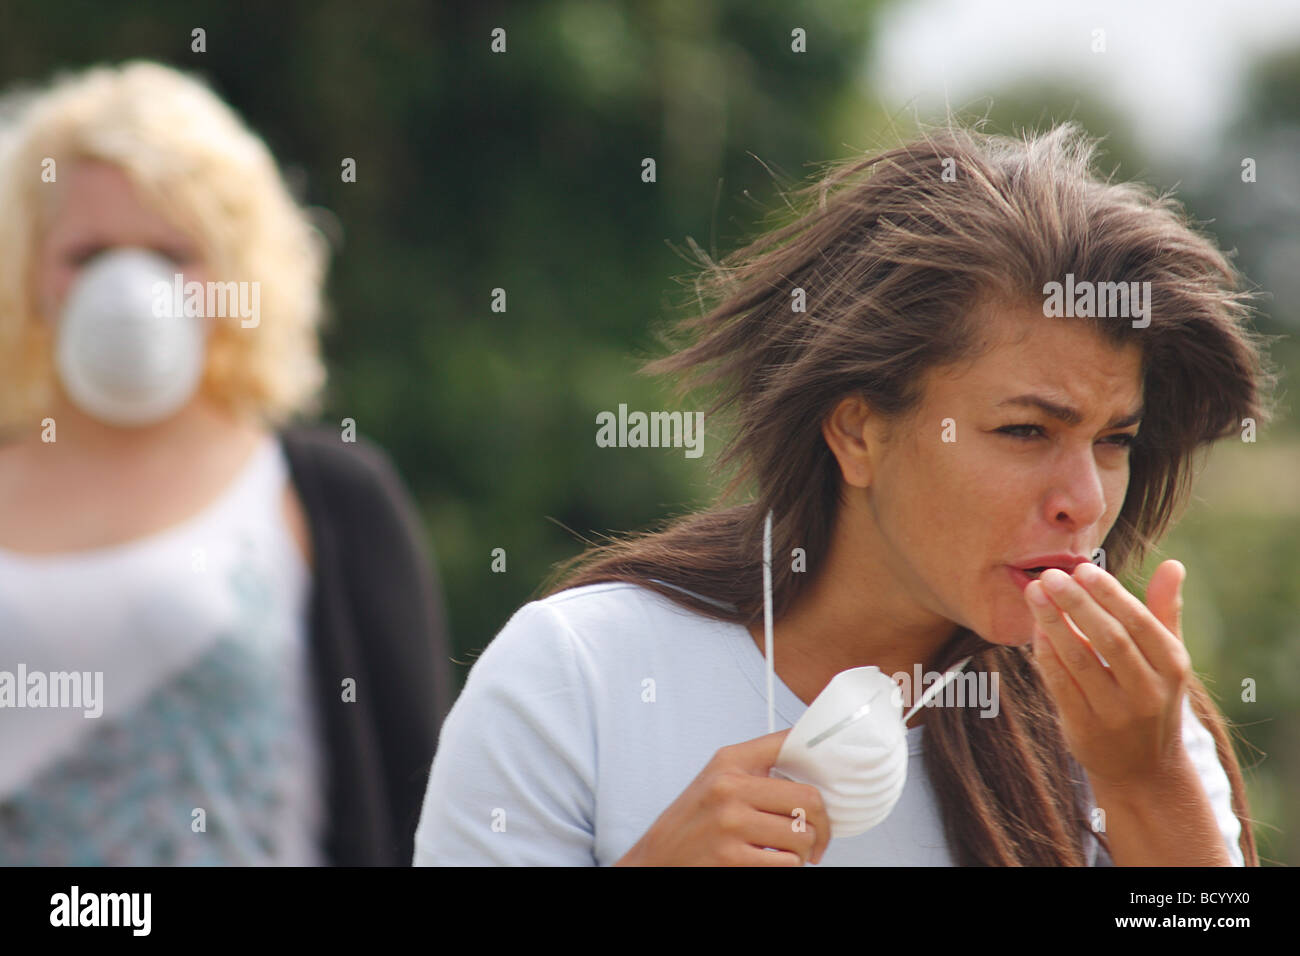 two women in street wearing filter masks one sneezing Stock Photo